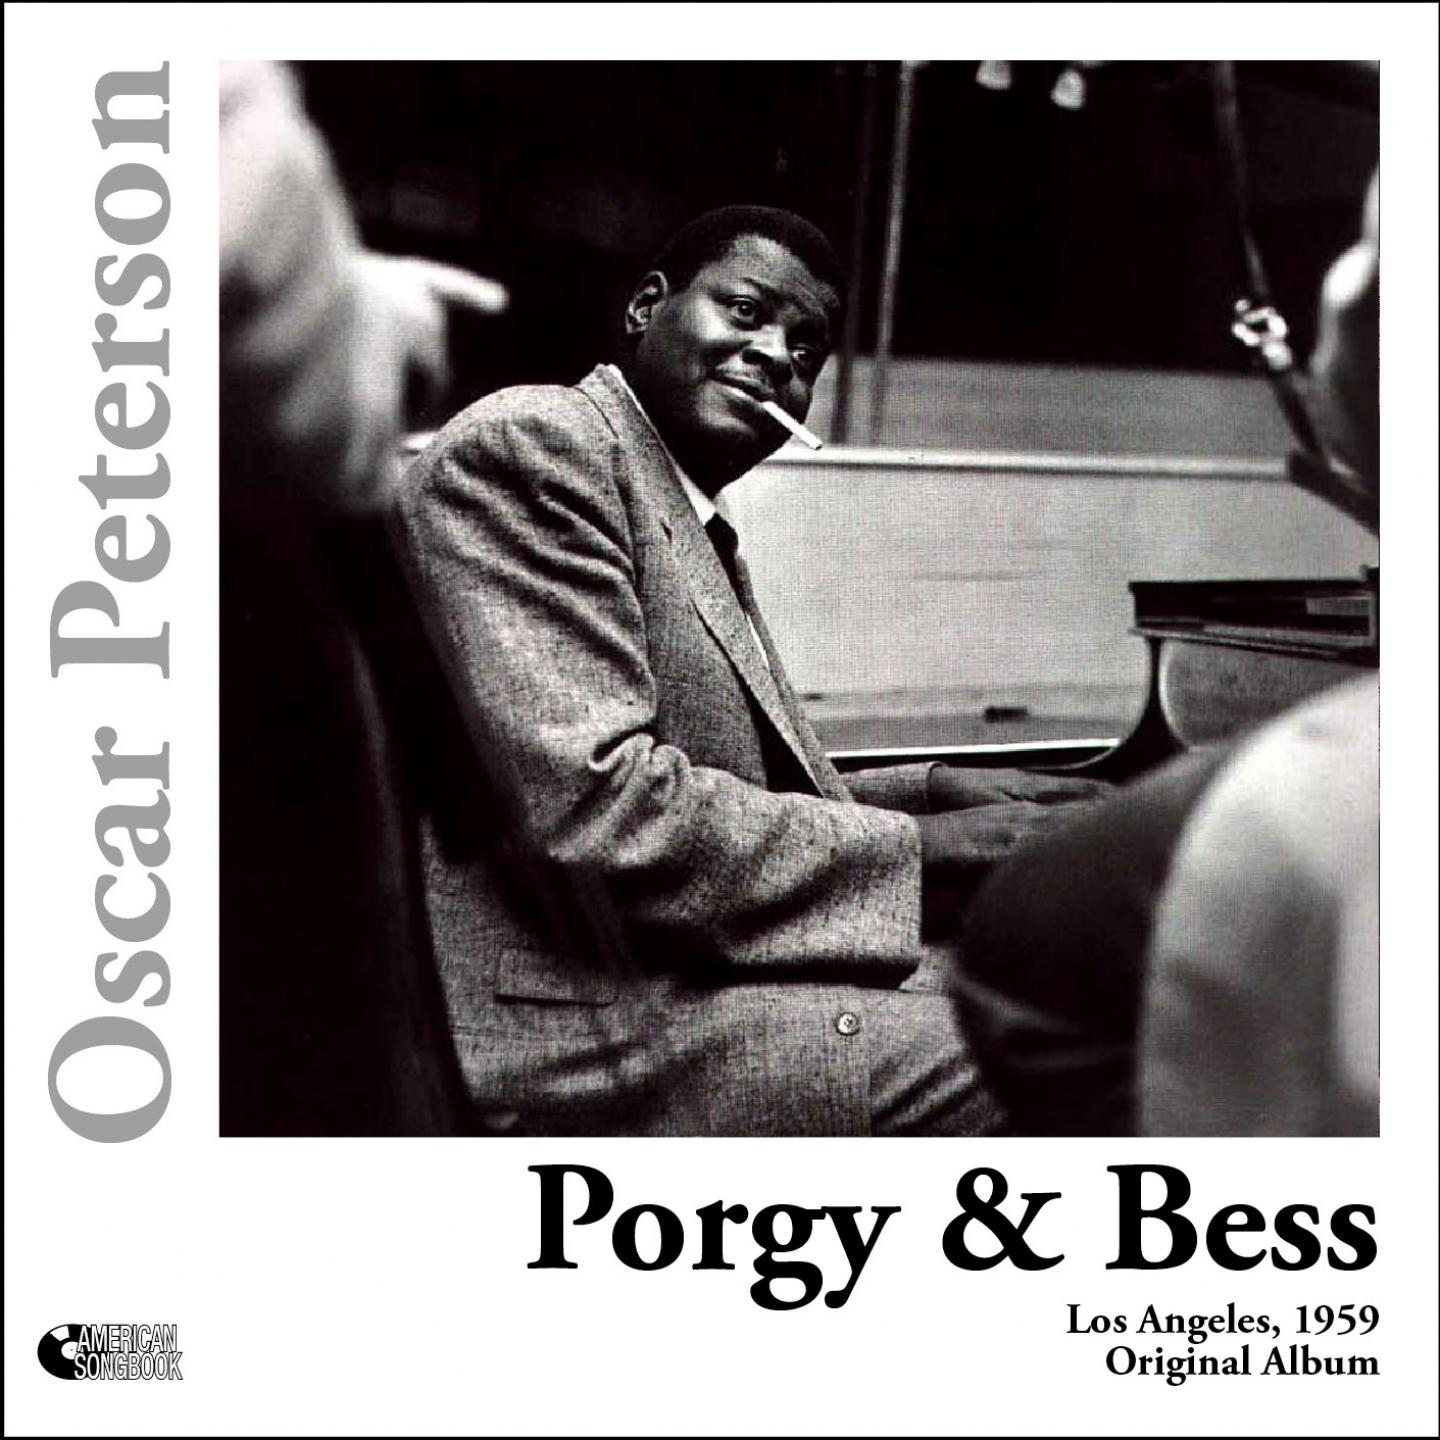 Oscar Peterson Plays Progy & Bess (Original Album)